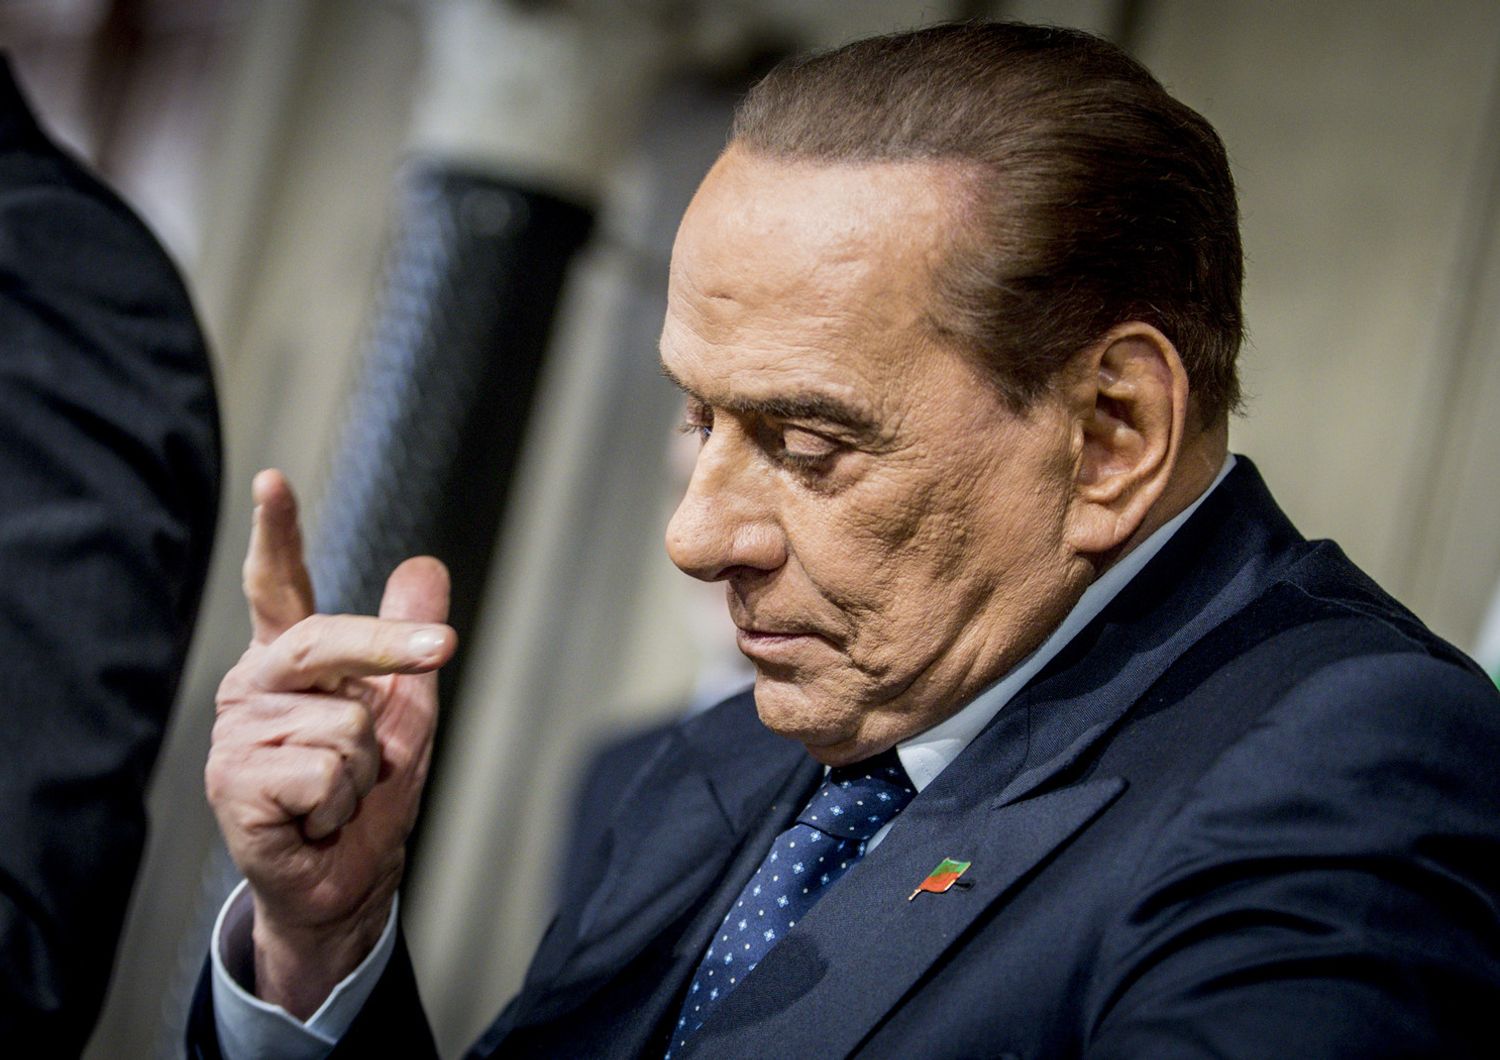 Silvio Berlusconi (Agf)&nbsp;